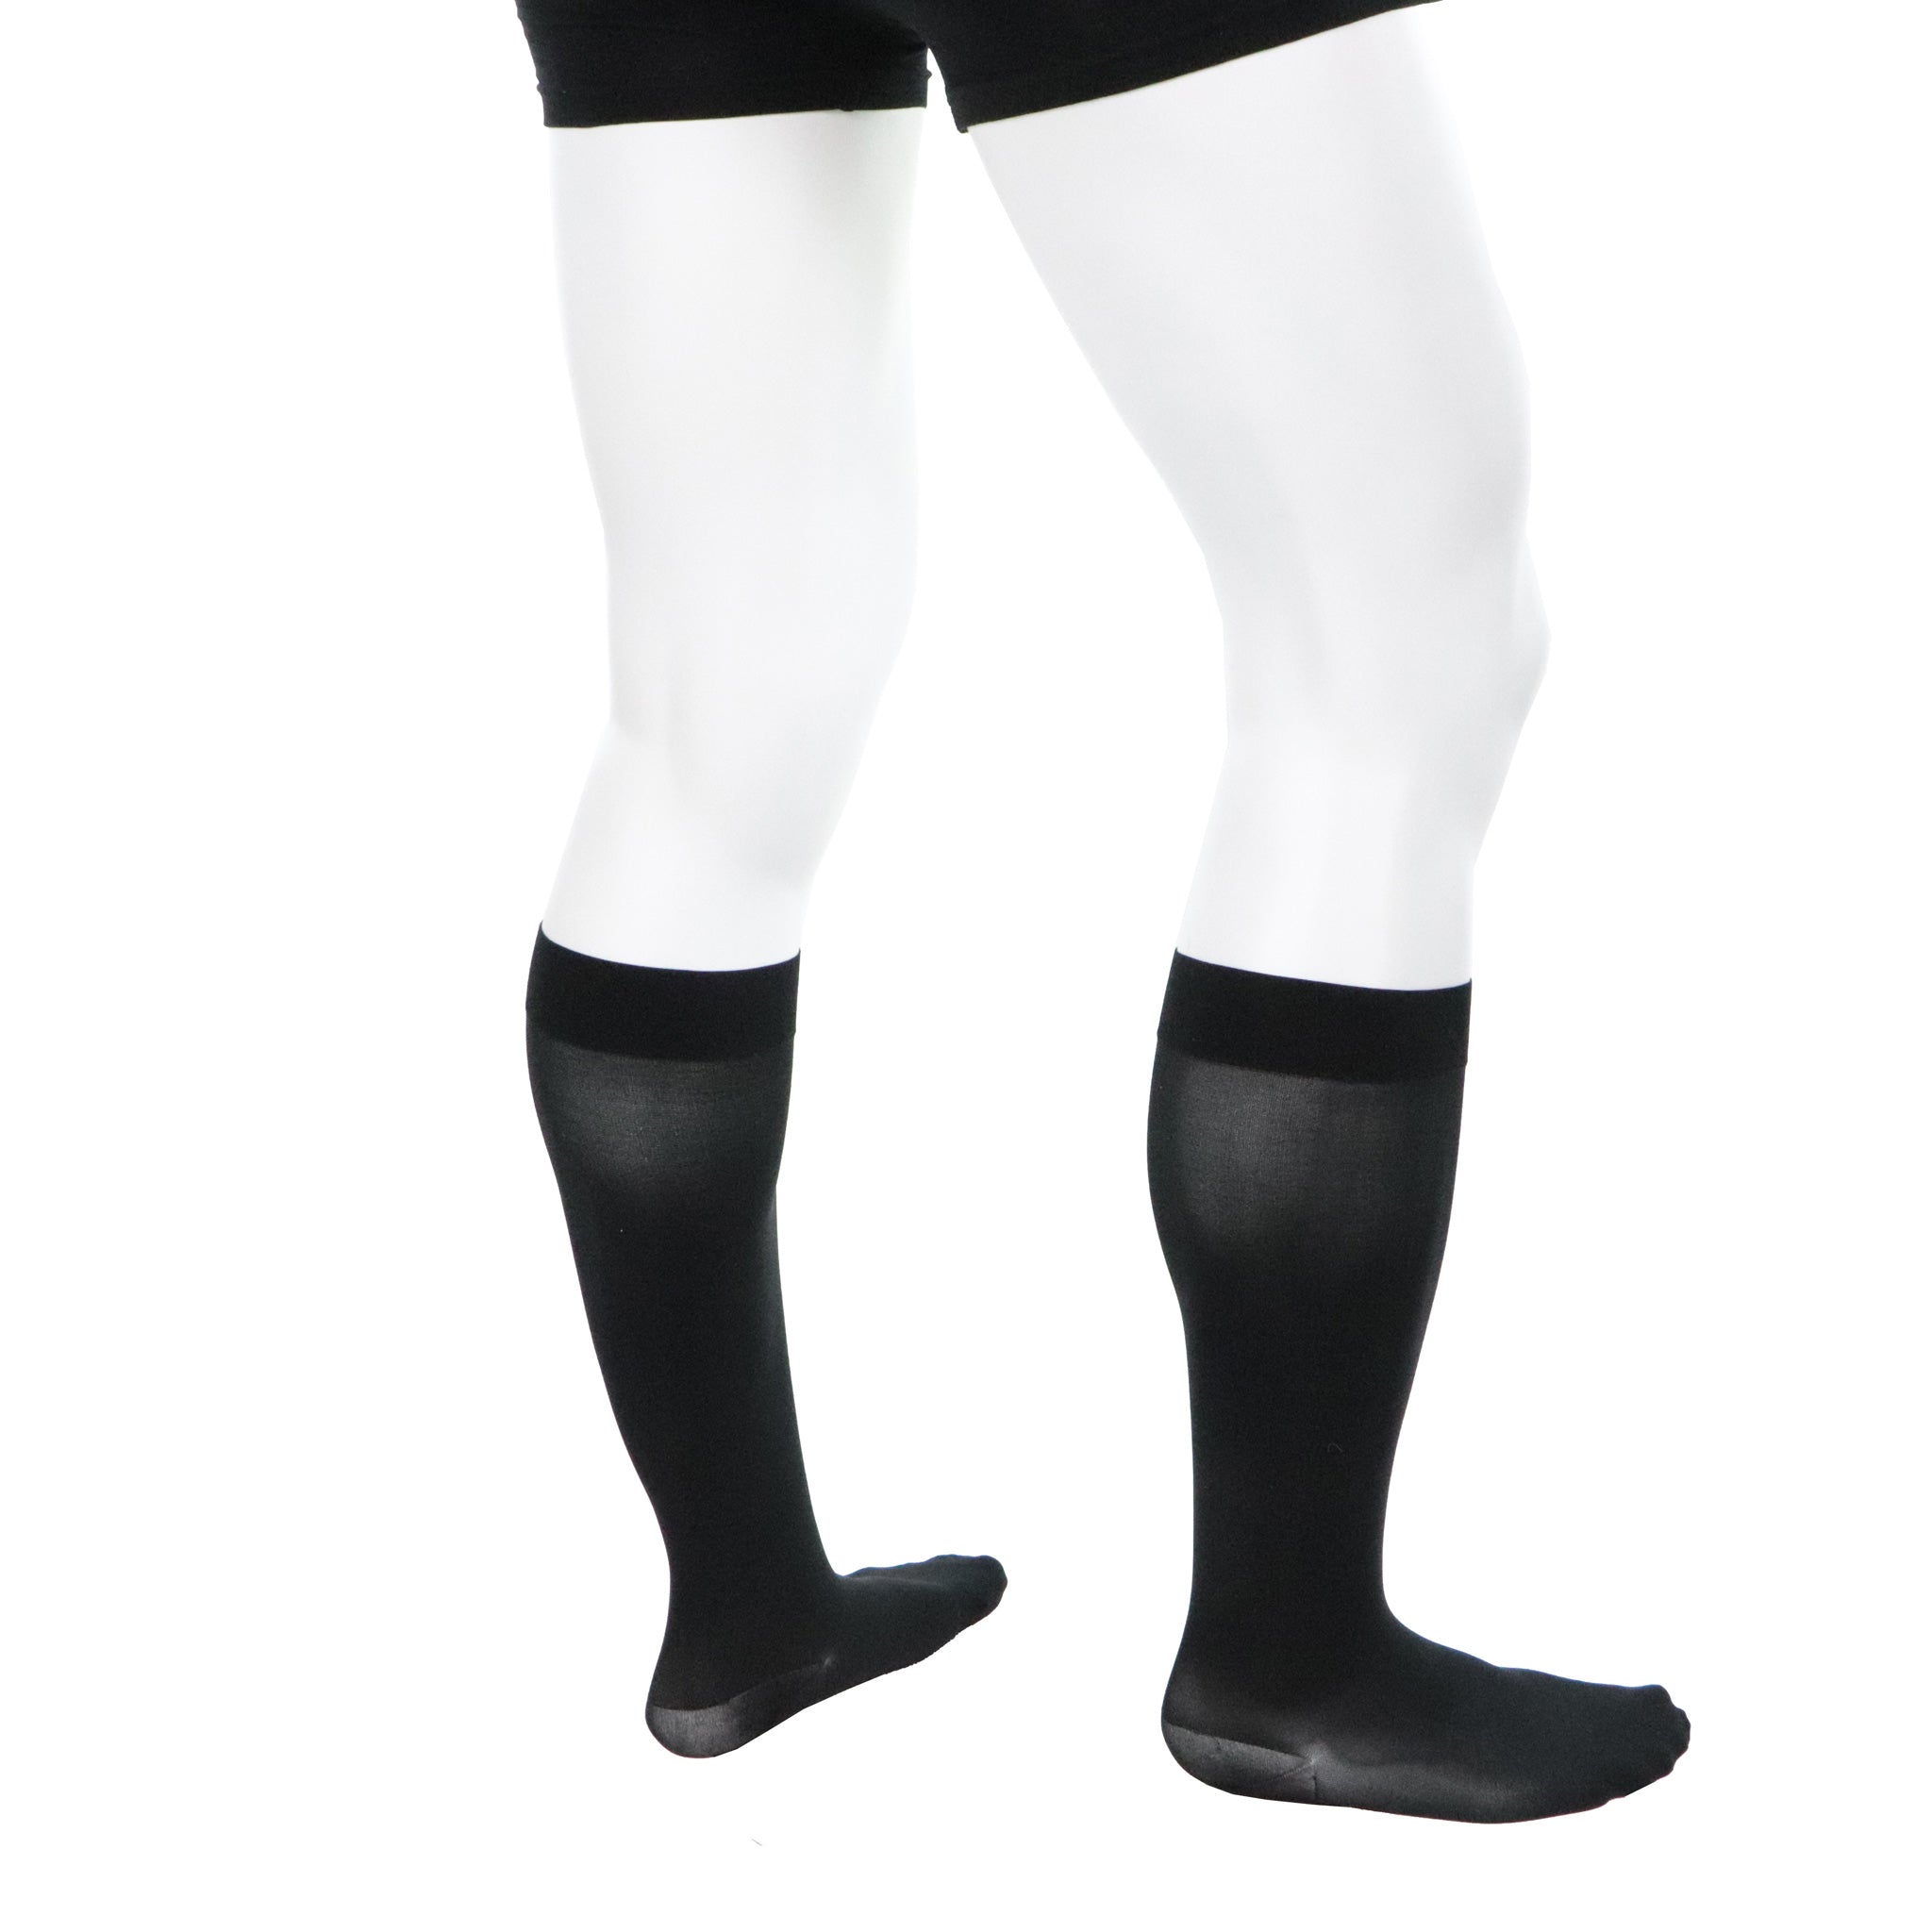 20 30 mmhg compression socks for men calf black Doctor Brace Circutrend rear right view